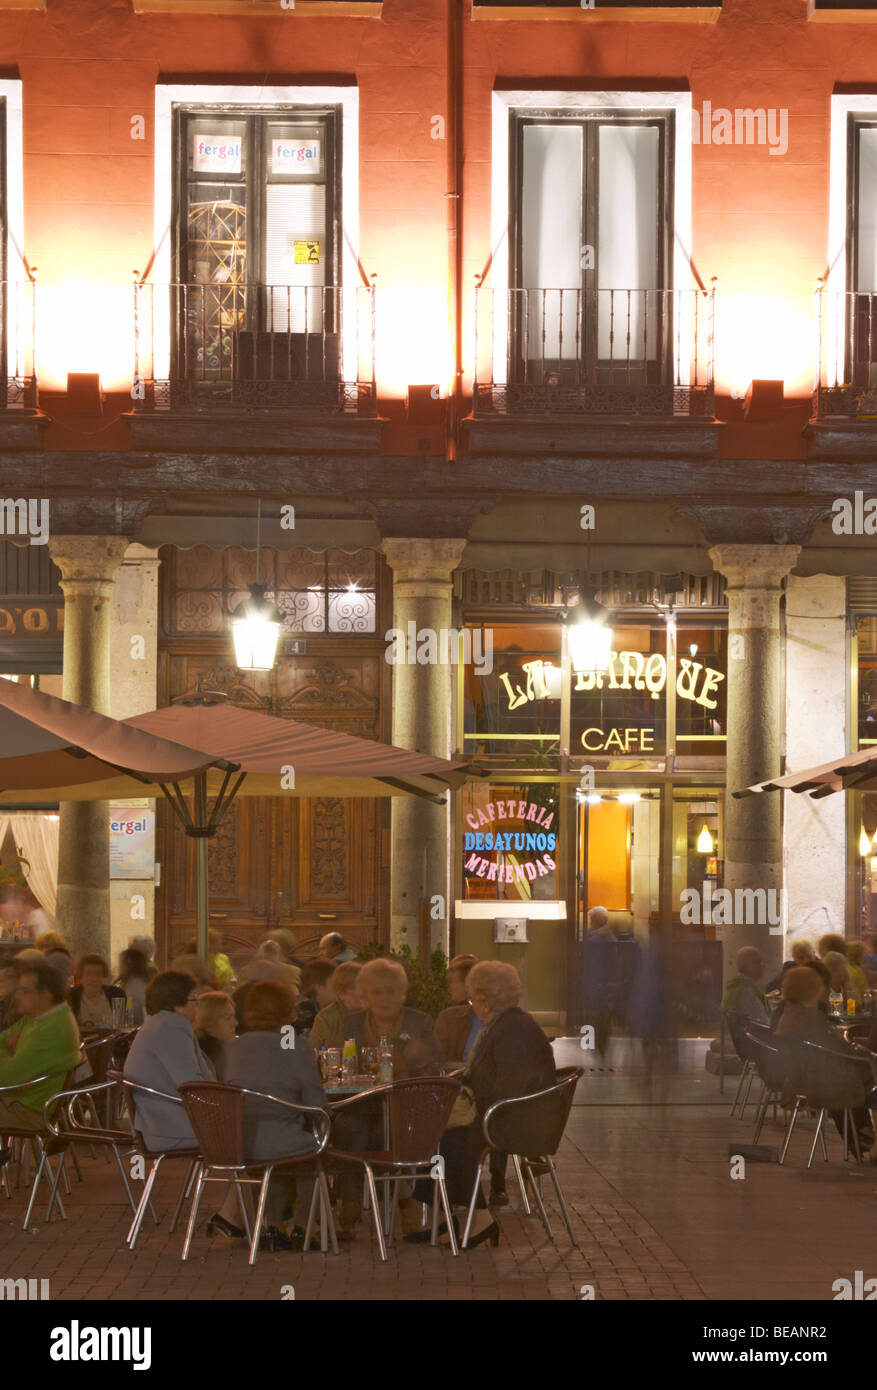 restaurant terrace plaza mayor Valladolid spain castile and leon Stock Photo